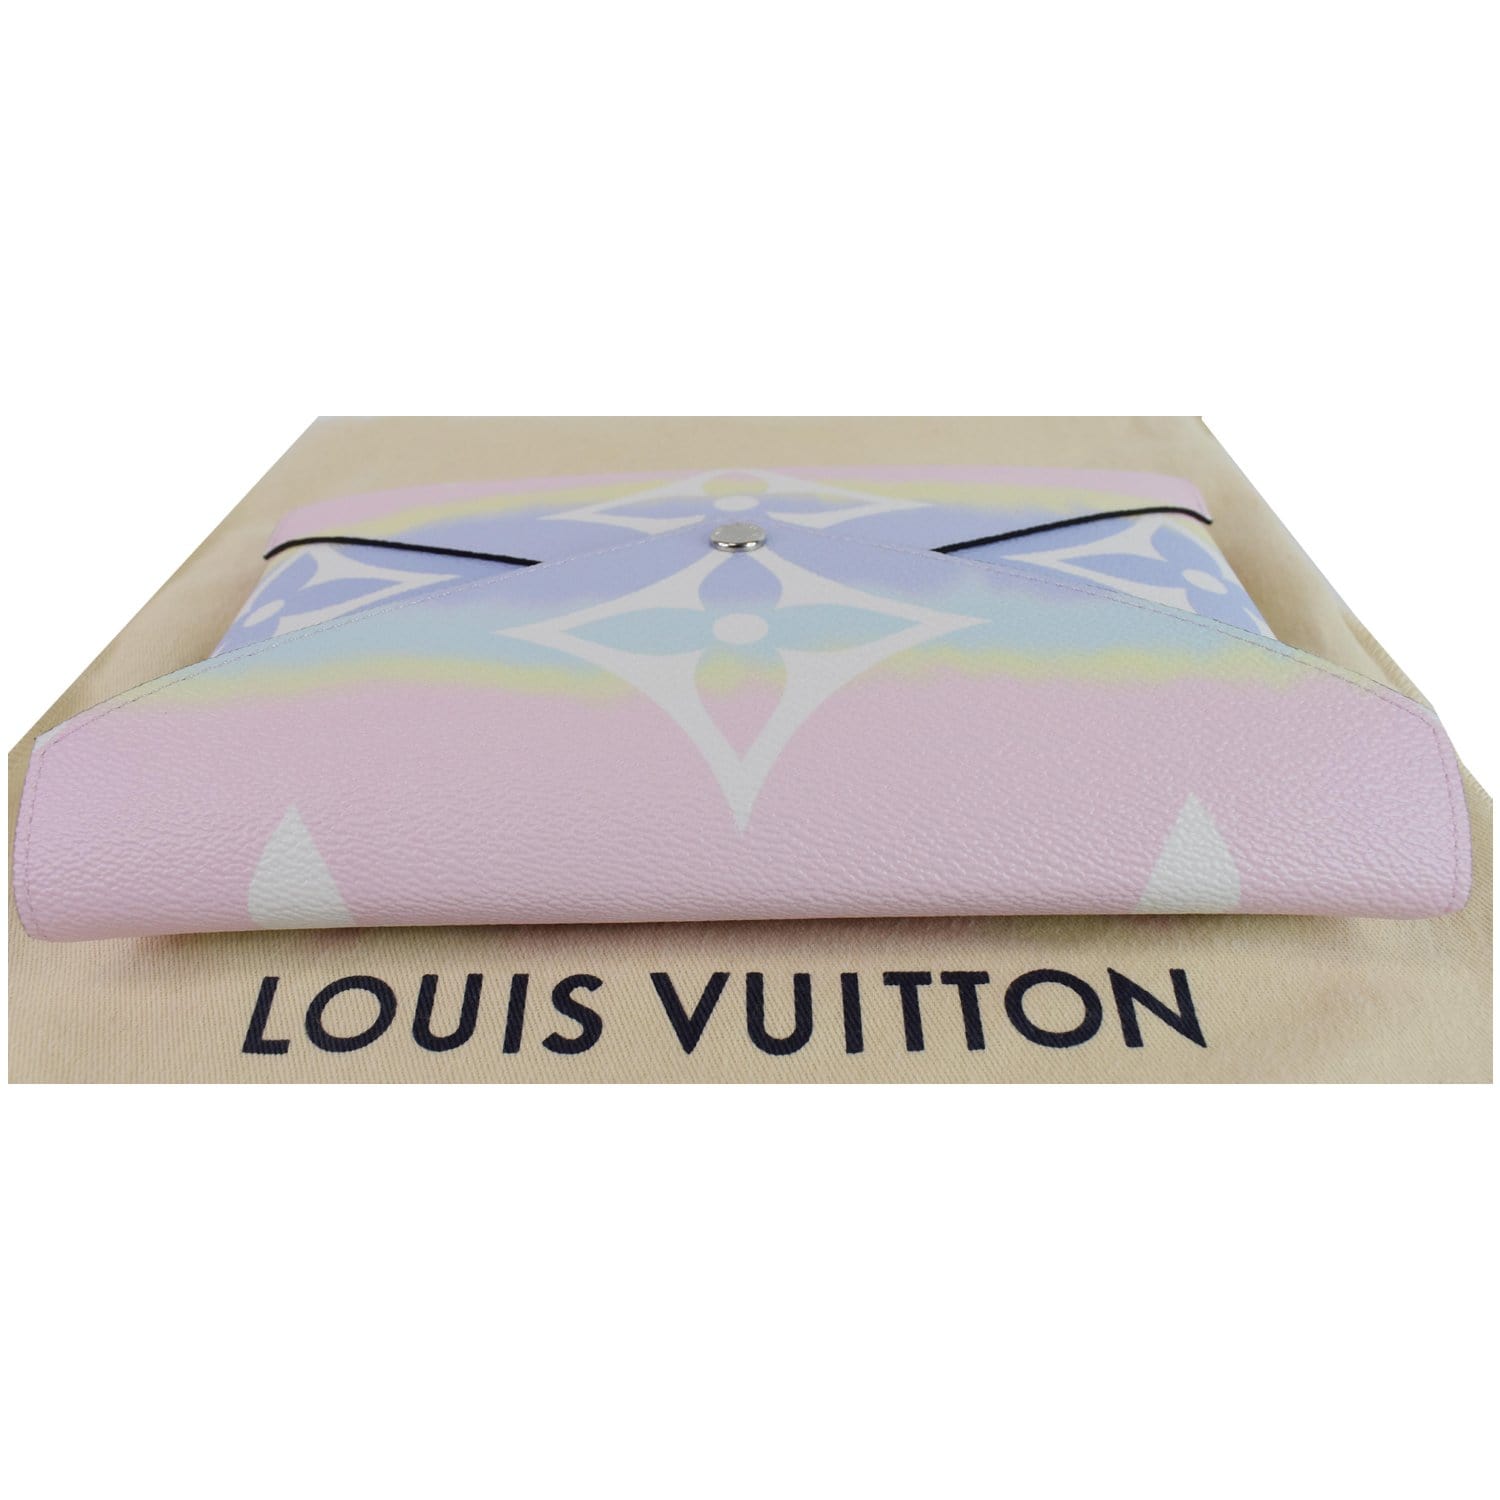 Louis Vuitton Large Kirigami Pochette in Escale Pastel - The Palm